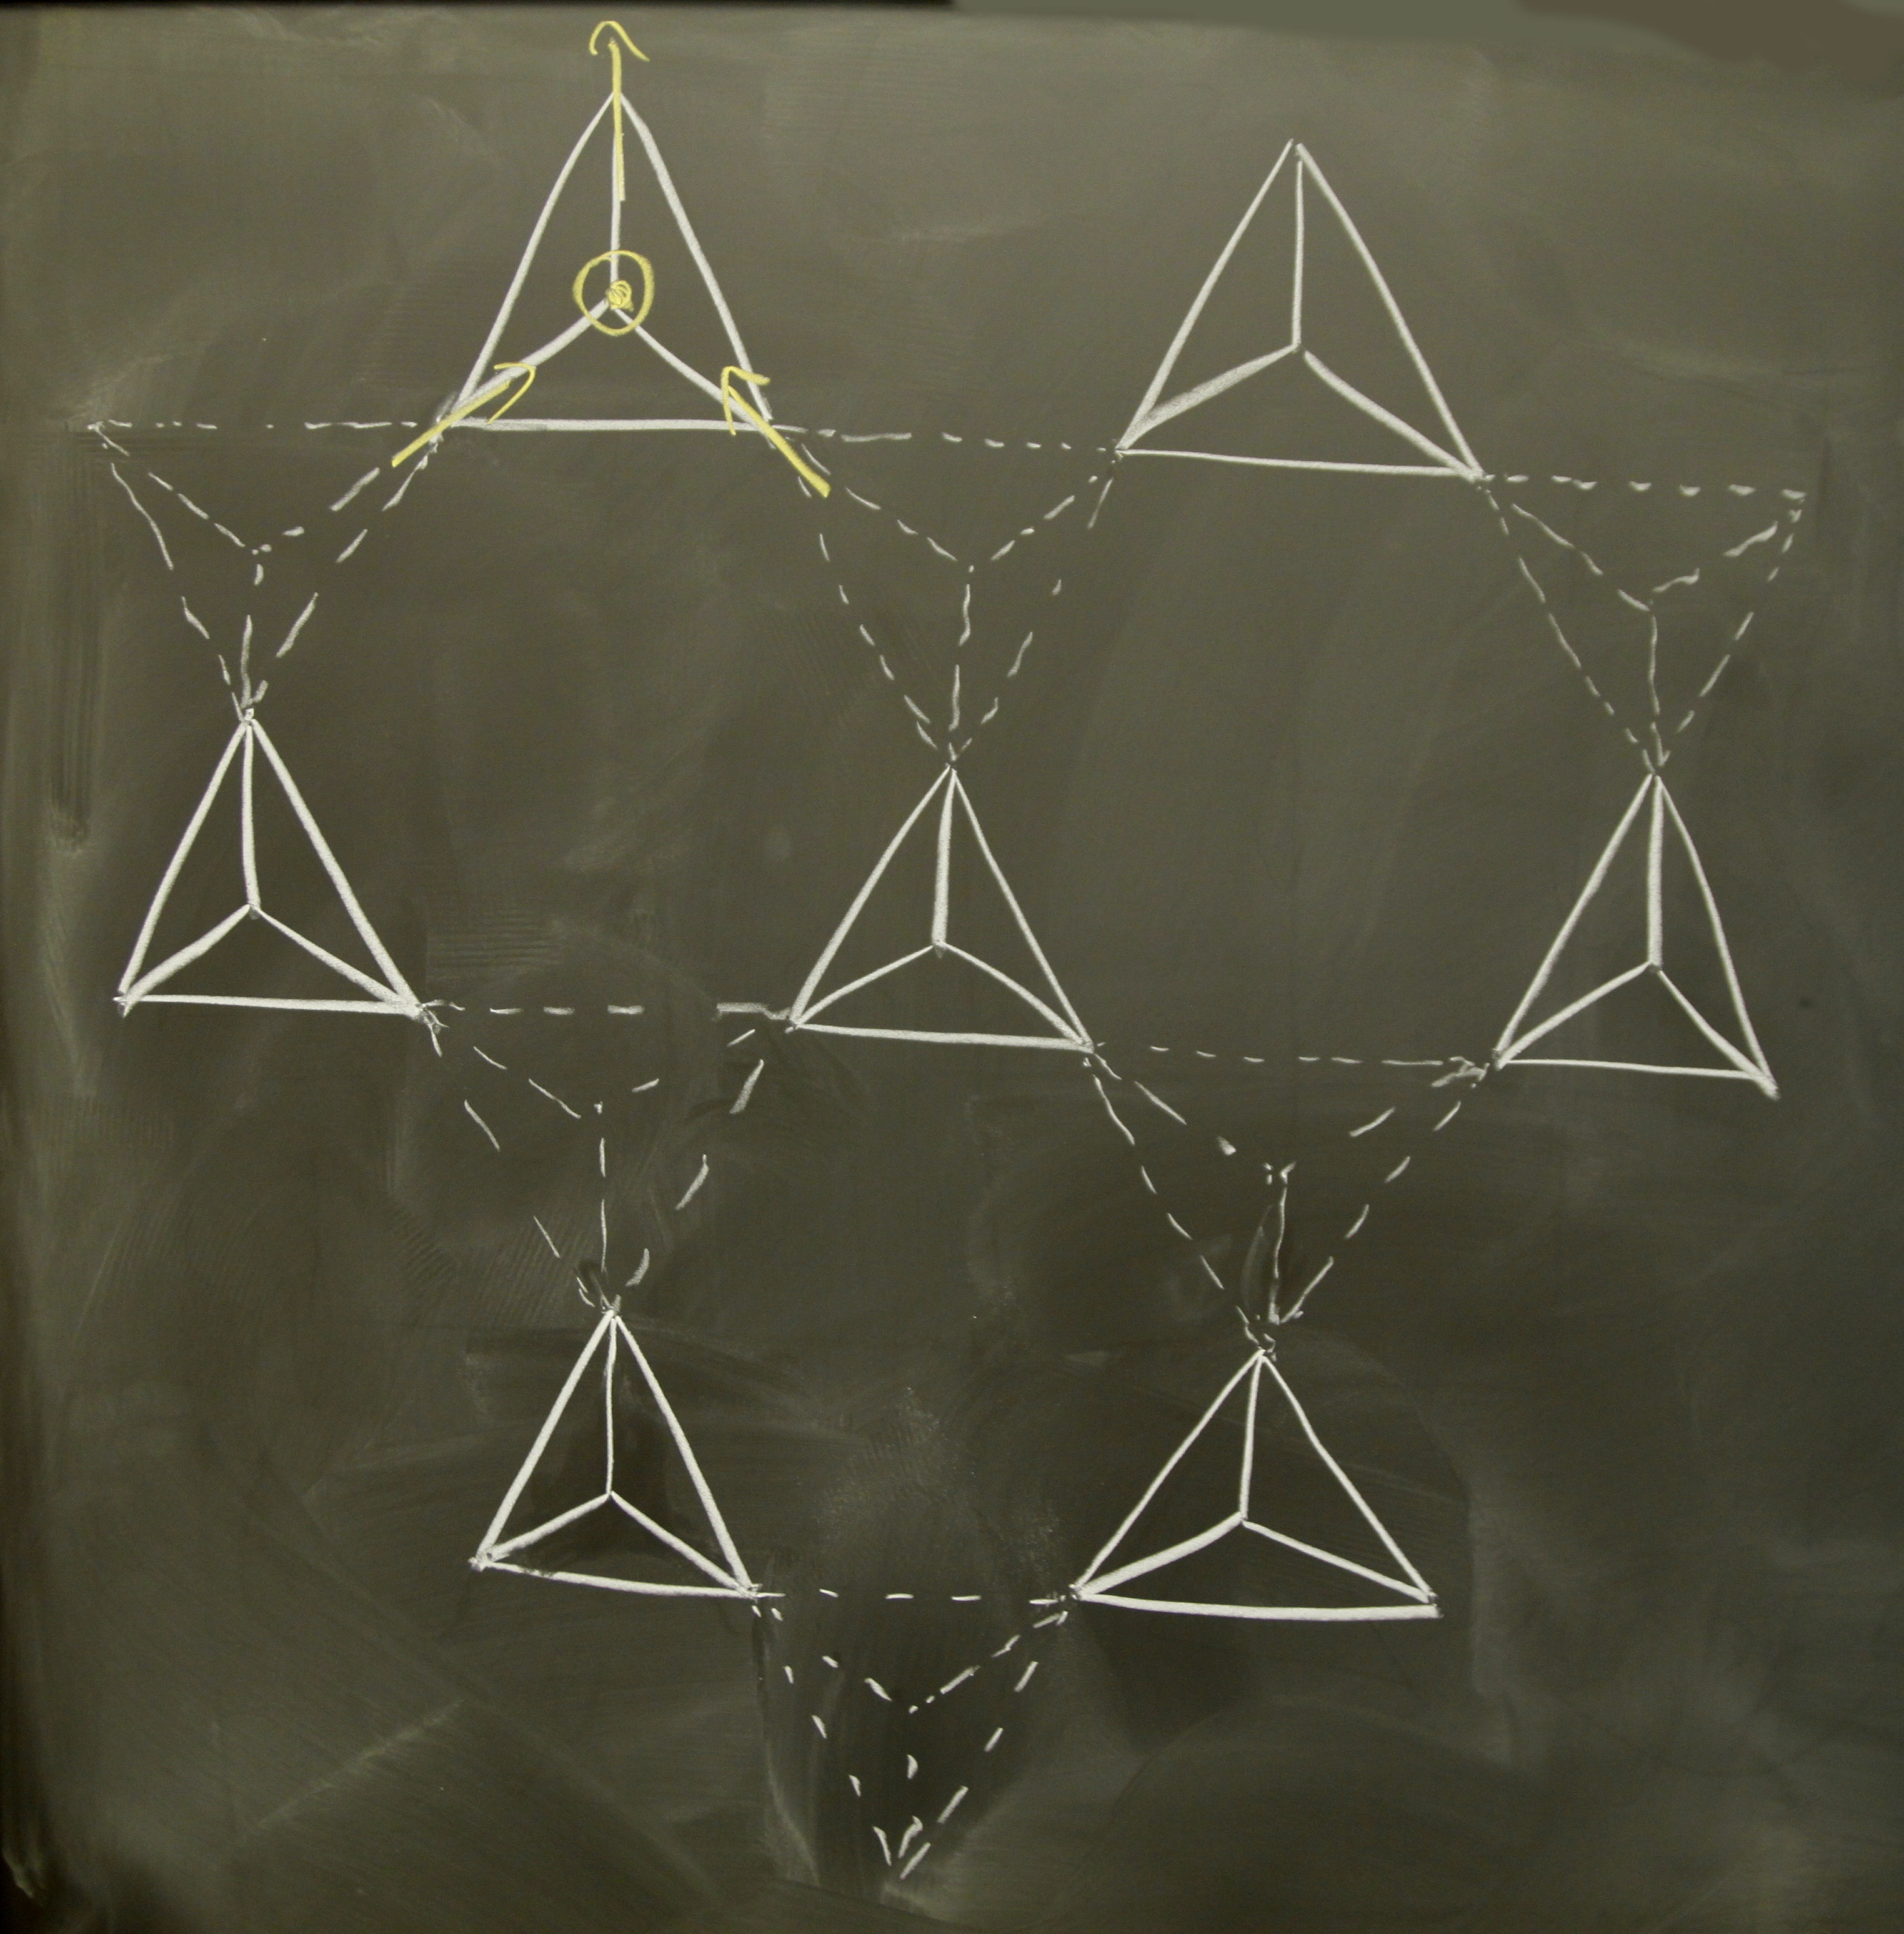 Tetrahedral Lattice of Spin Ice